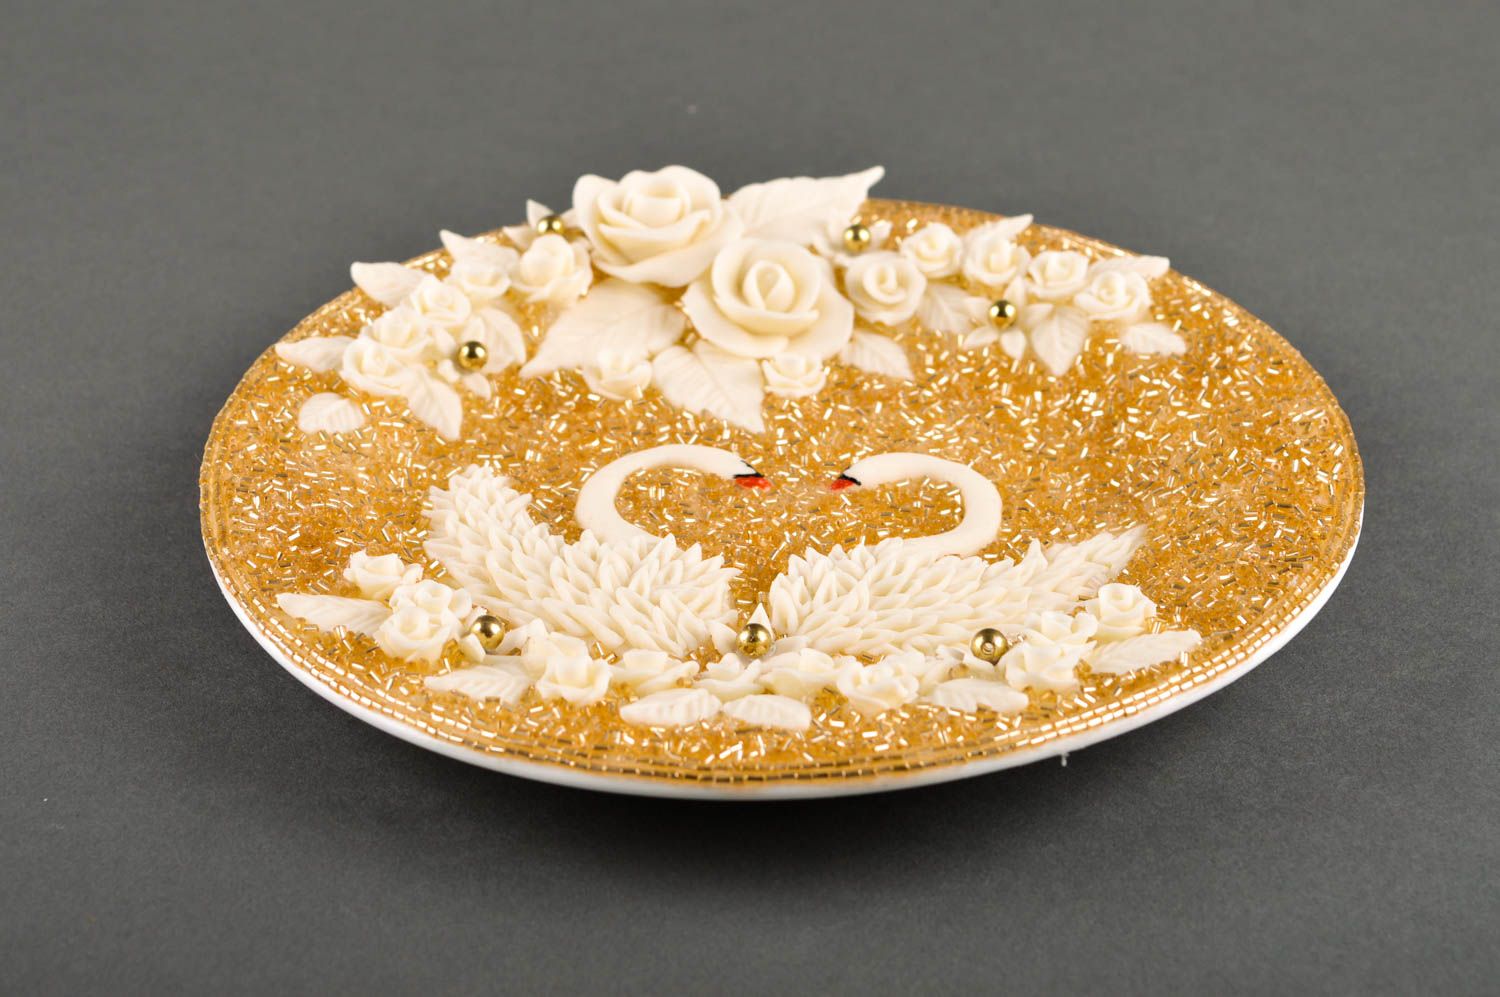 Свадебная тарелка хэнд мэйд посуда на свадьбу красивая посуда тарелка с лебедями фото 4